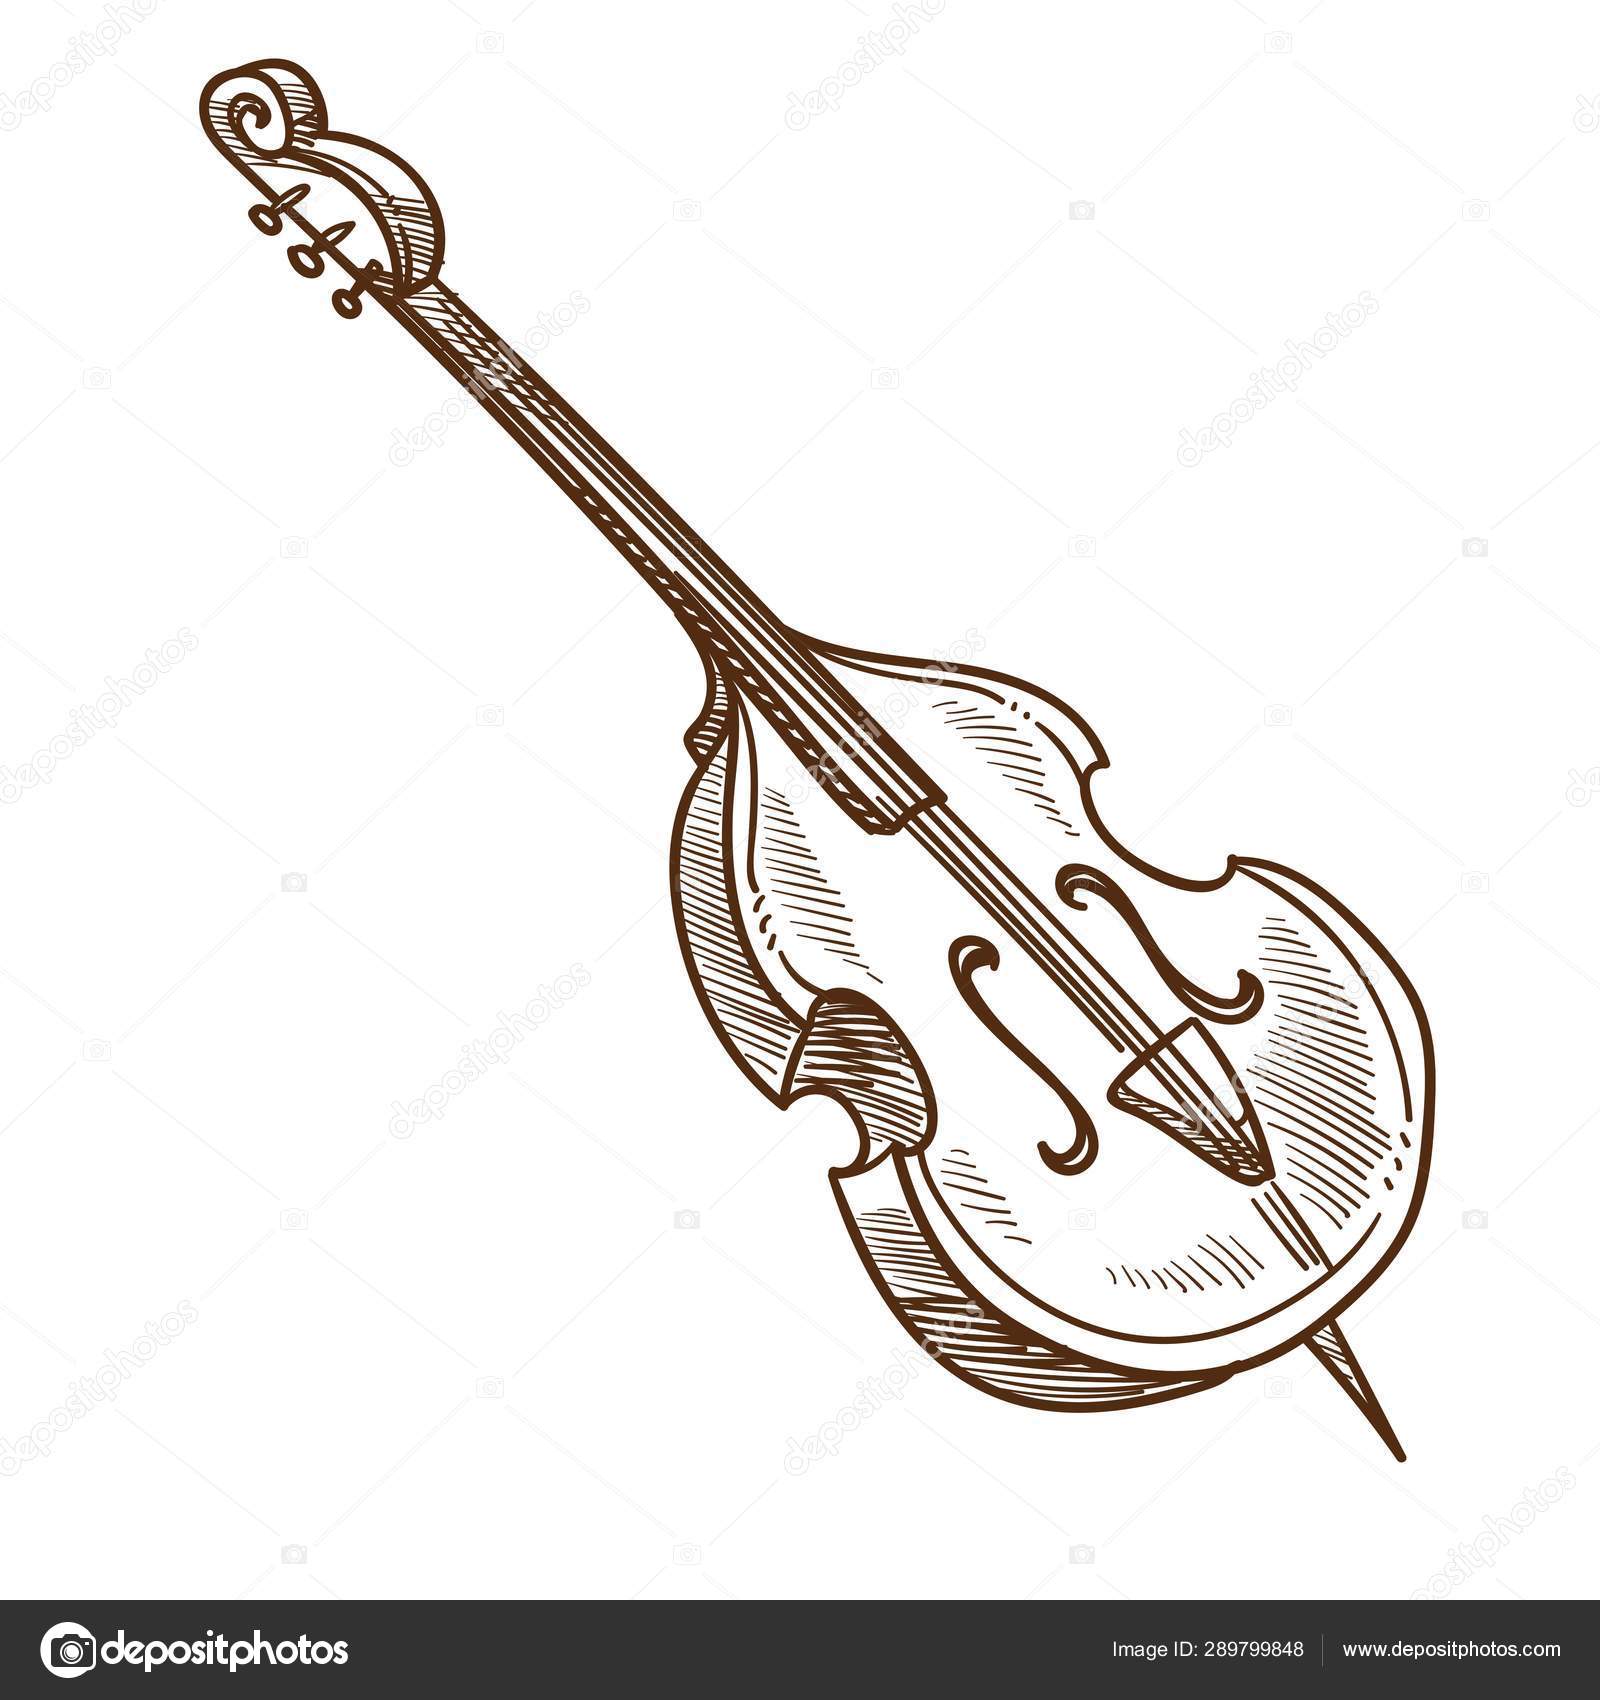 https://st4.depositphotos.com/1028367/28979/v/1600/depositphotos_289799848-stock-illustration-musical-instrument-violoncello-or-cello.jpg